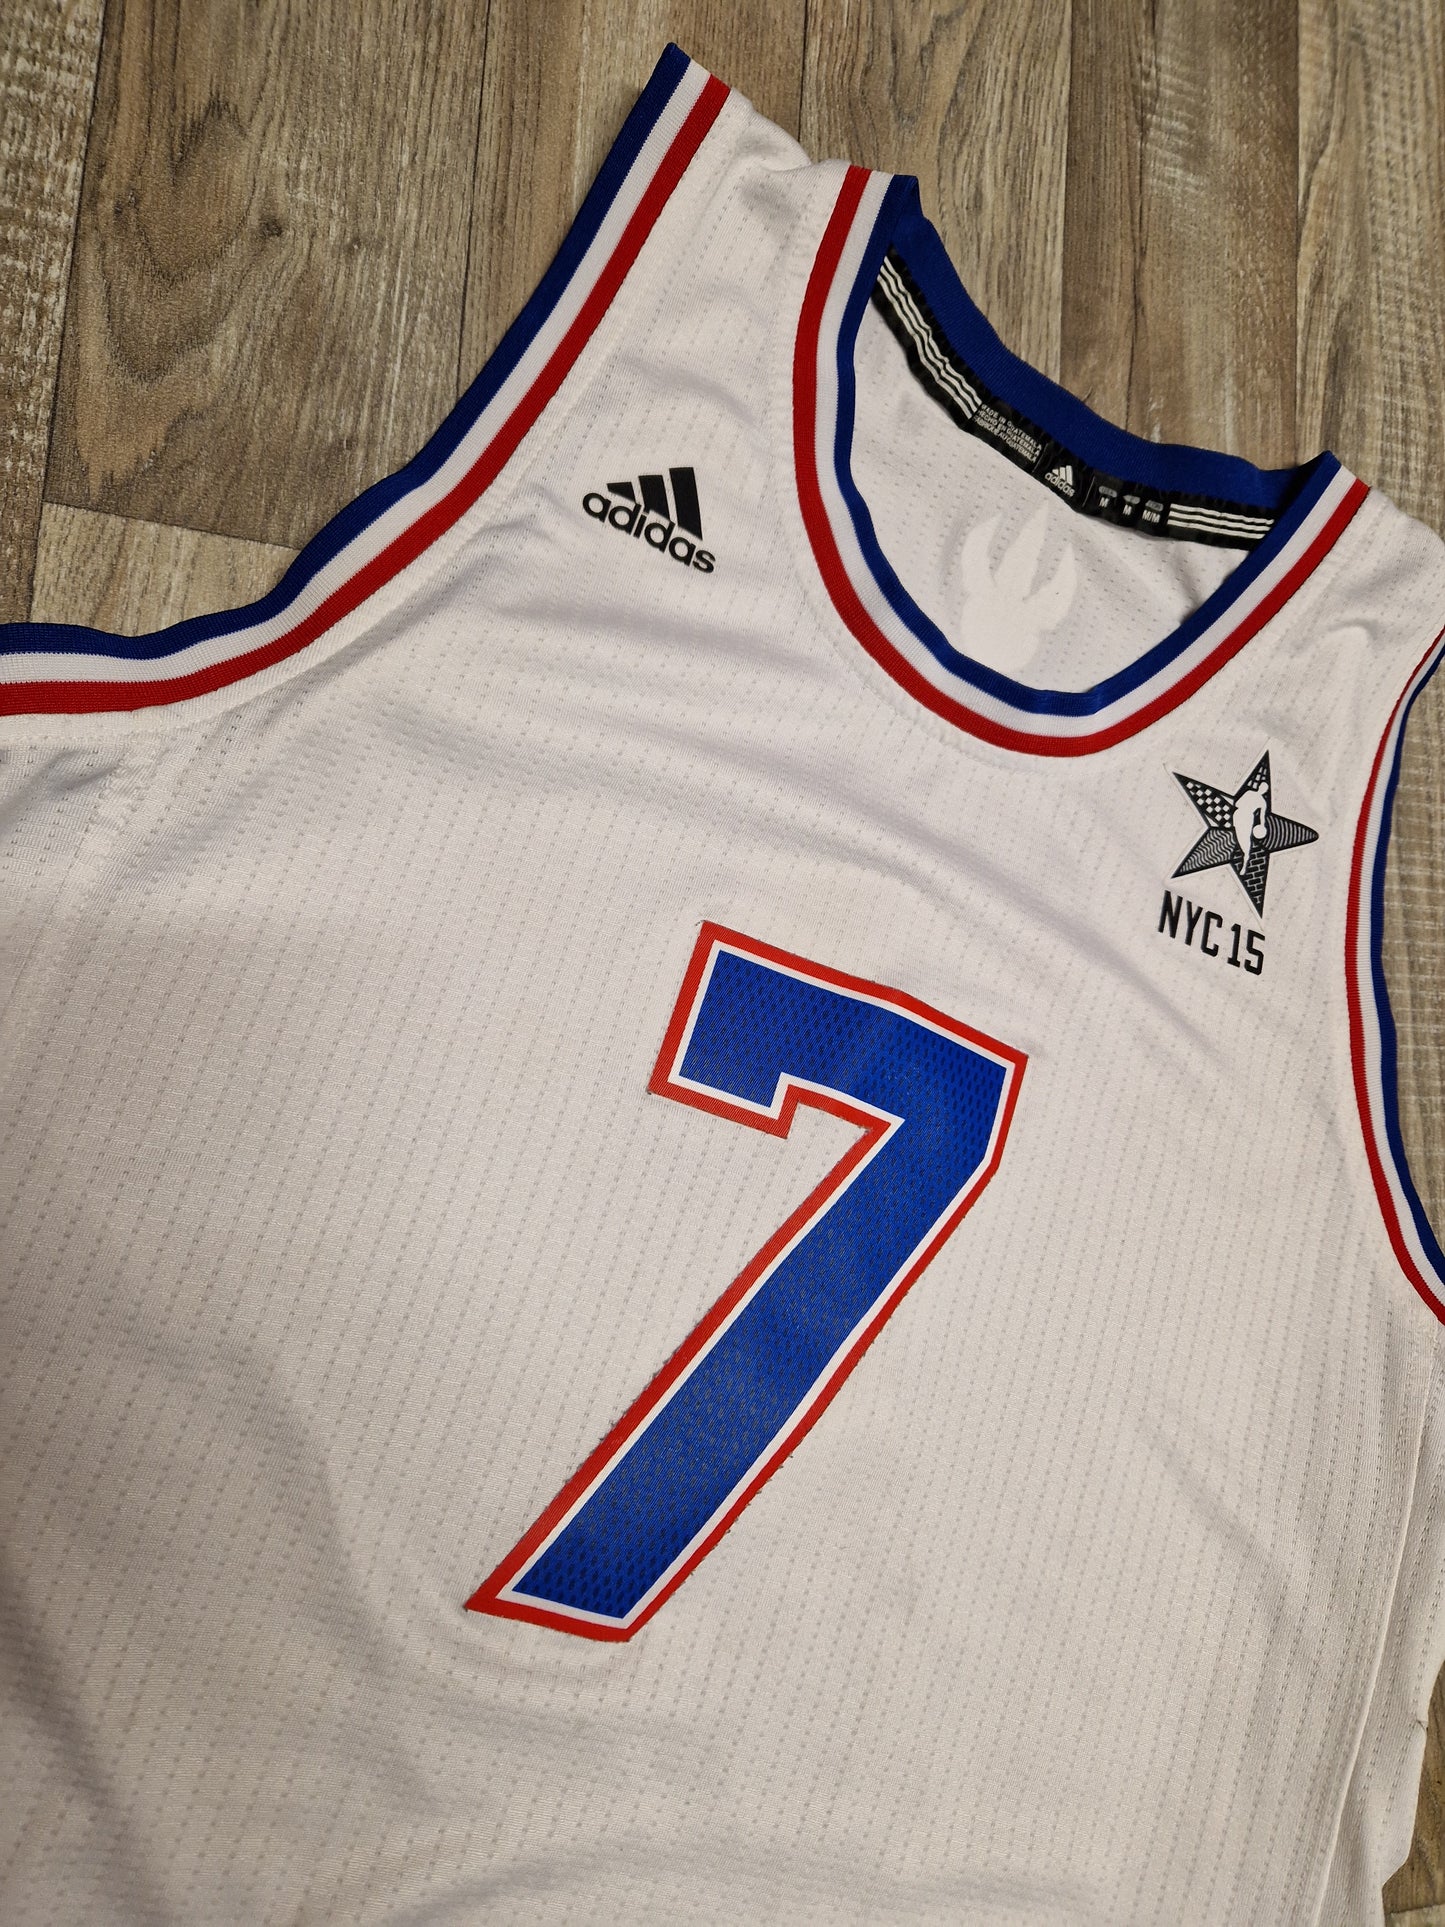 Kyle Lowry NBA All Star 2015 Jersey Size Medium